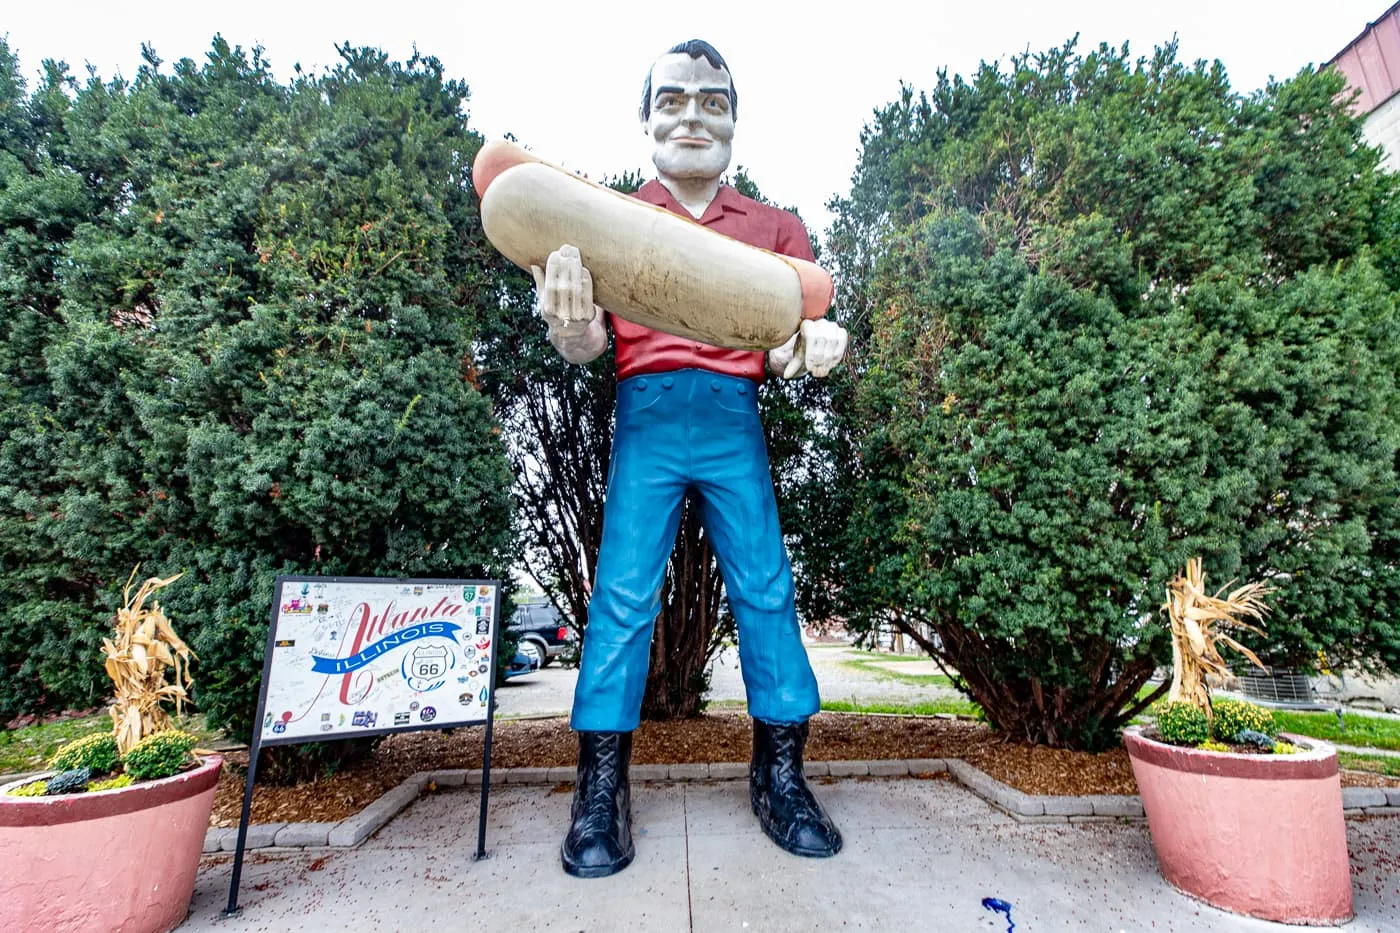 Paul Bunyon Muffler Man Holding a Hot Dog in Atlanta, Illinois - Route 66 Roadside attraction